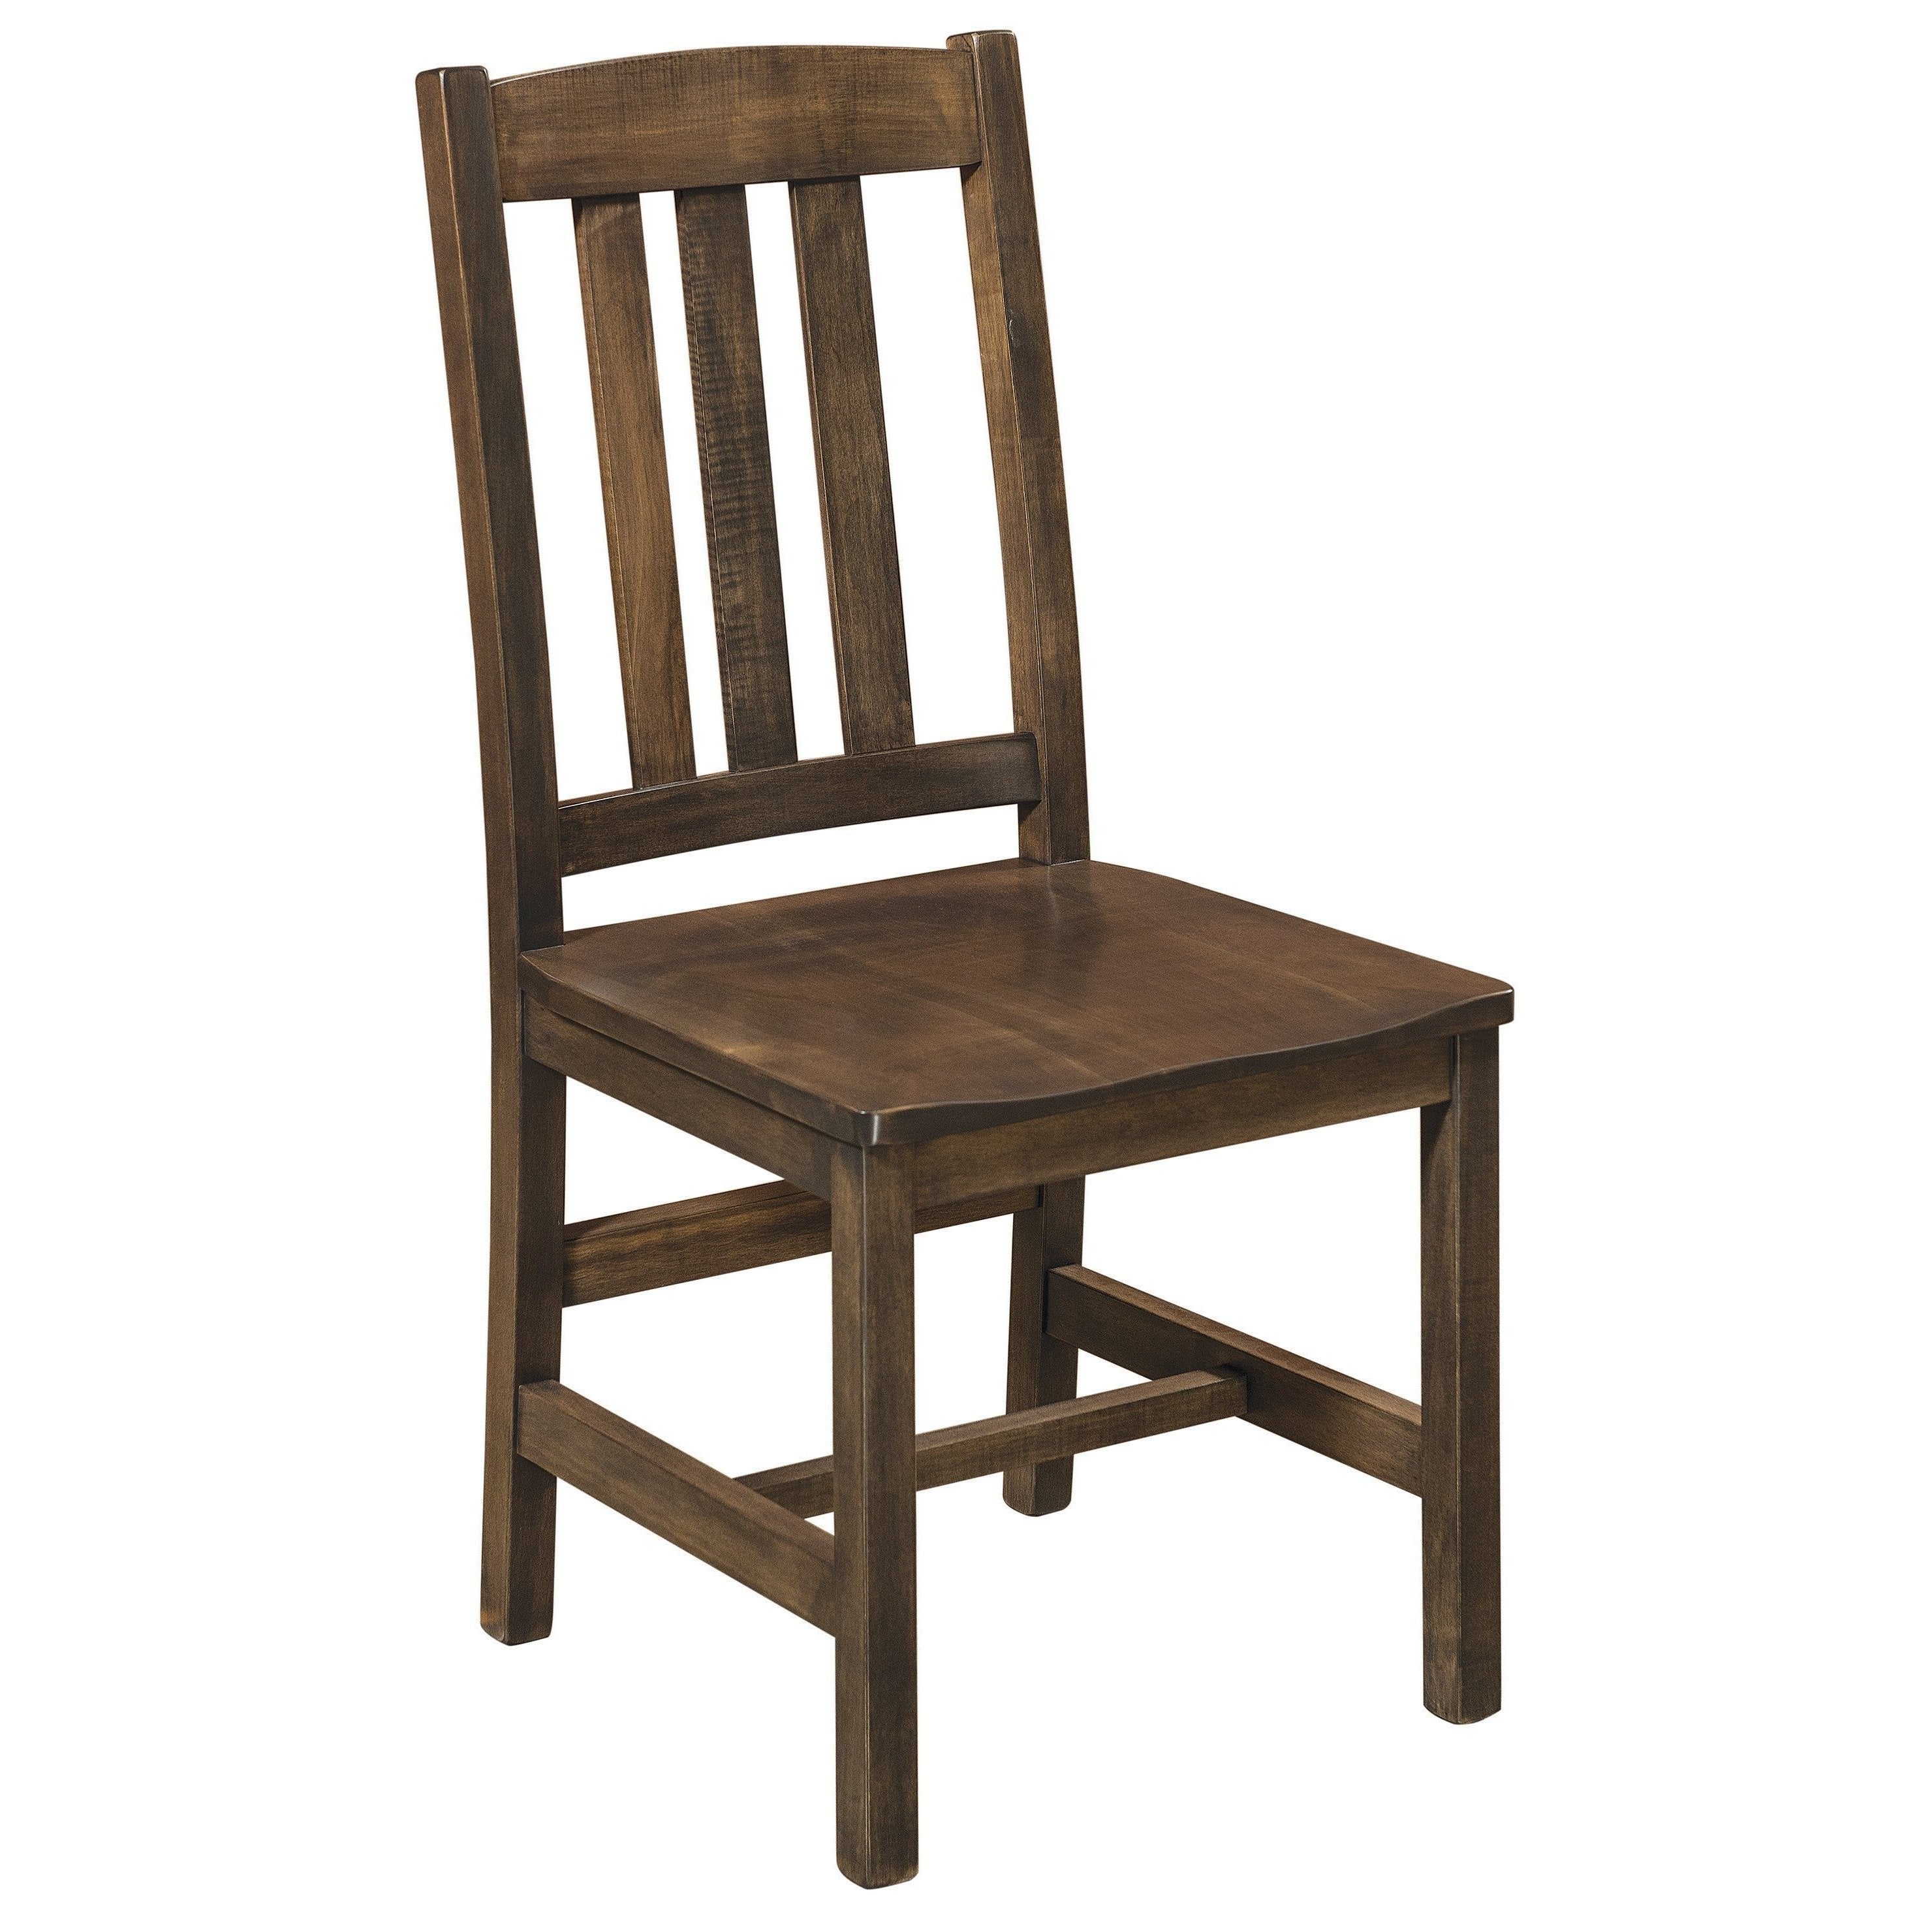 lodge-side-chair-260210.jpg